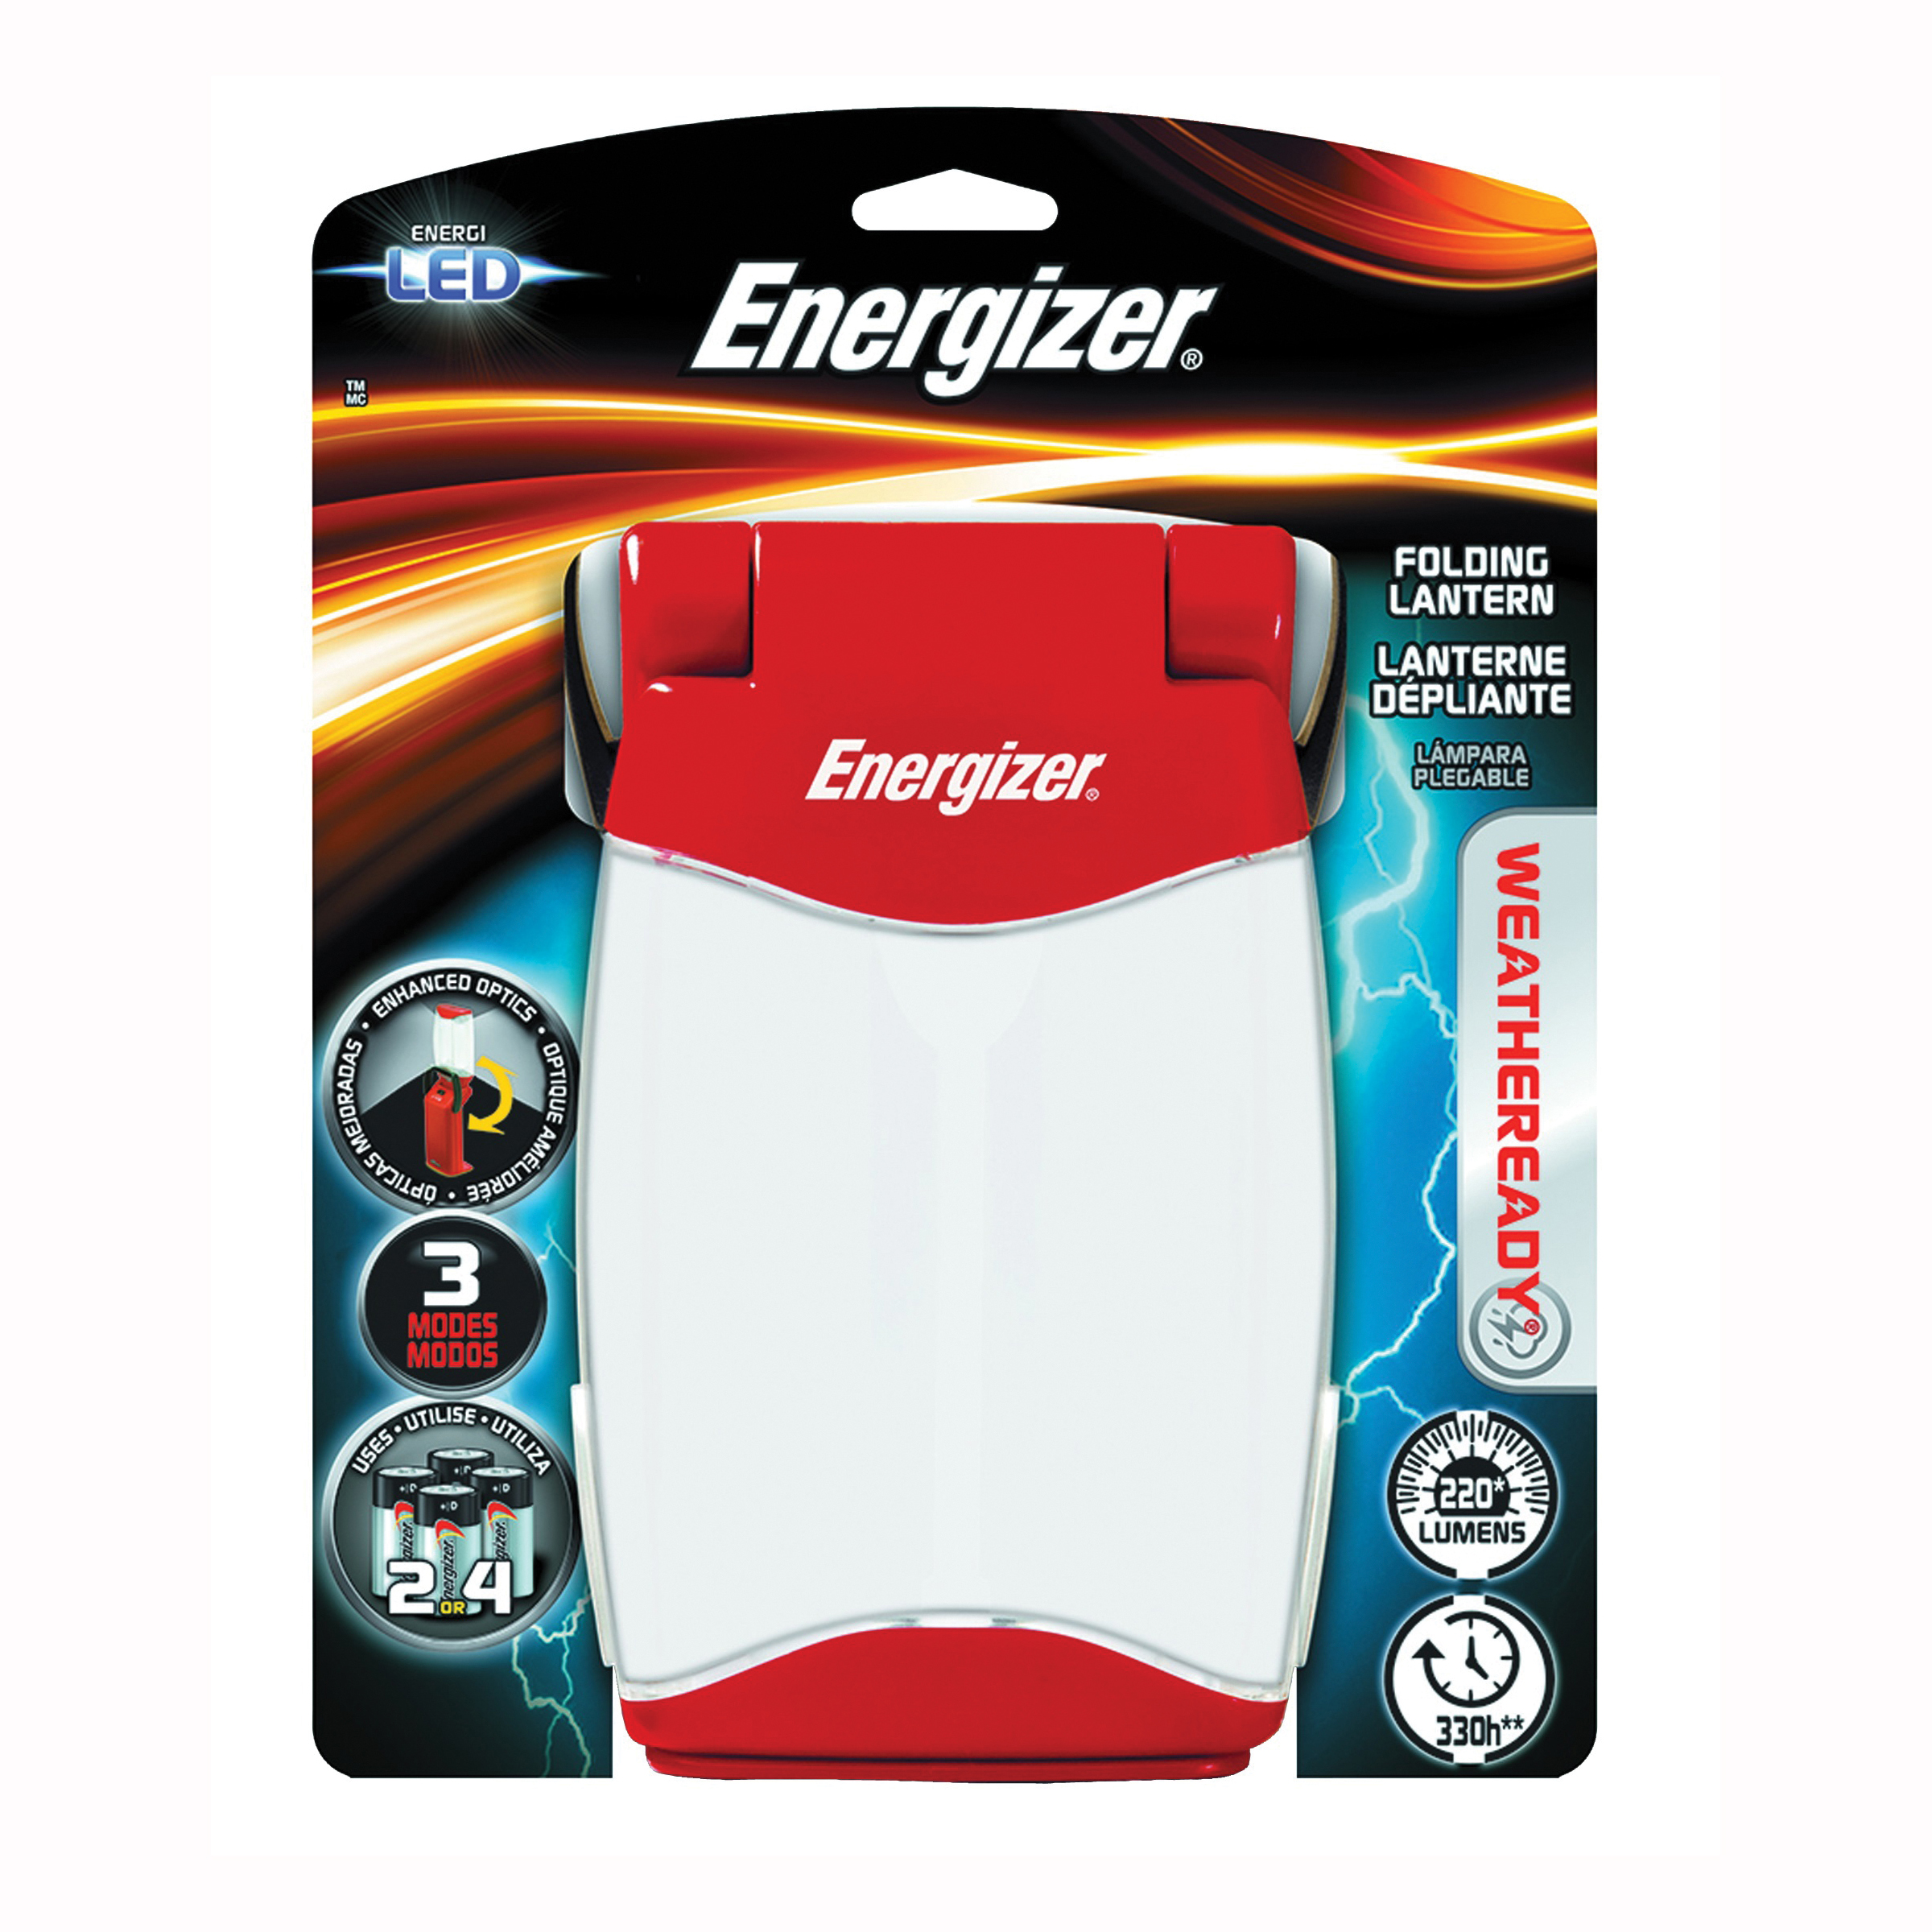 Energizer FL452WRBP